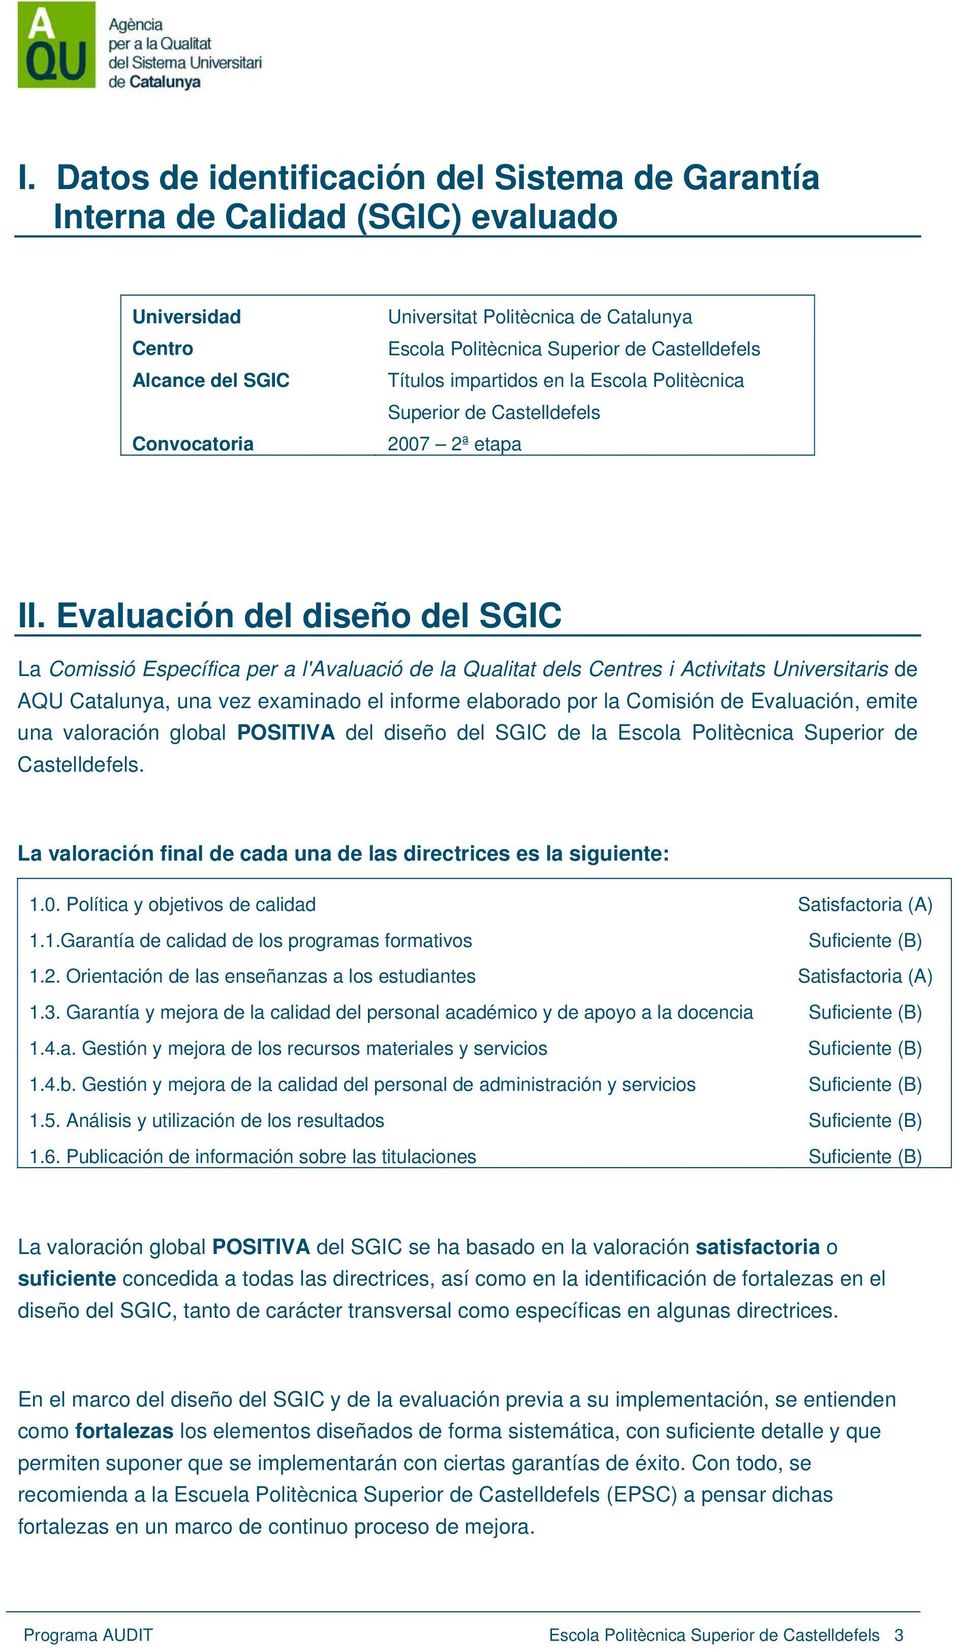 Evaluación del diseño del SGIC La Comissió Específica per a l'avaluació de la Qualitat dels Centres i Activitats Universitaris de AQU Catalunya, una vez examinado el informe elaborado por la Comisión